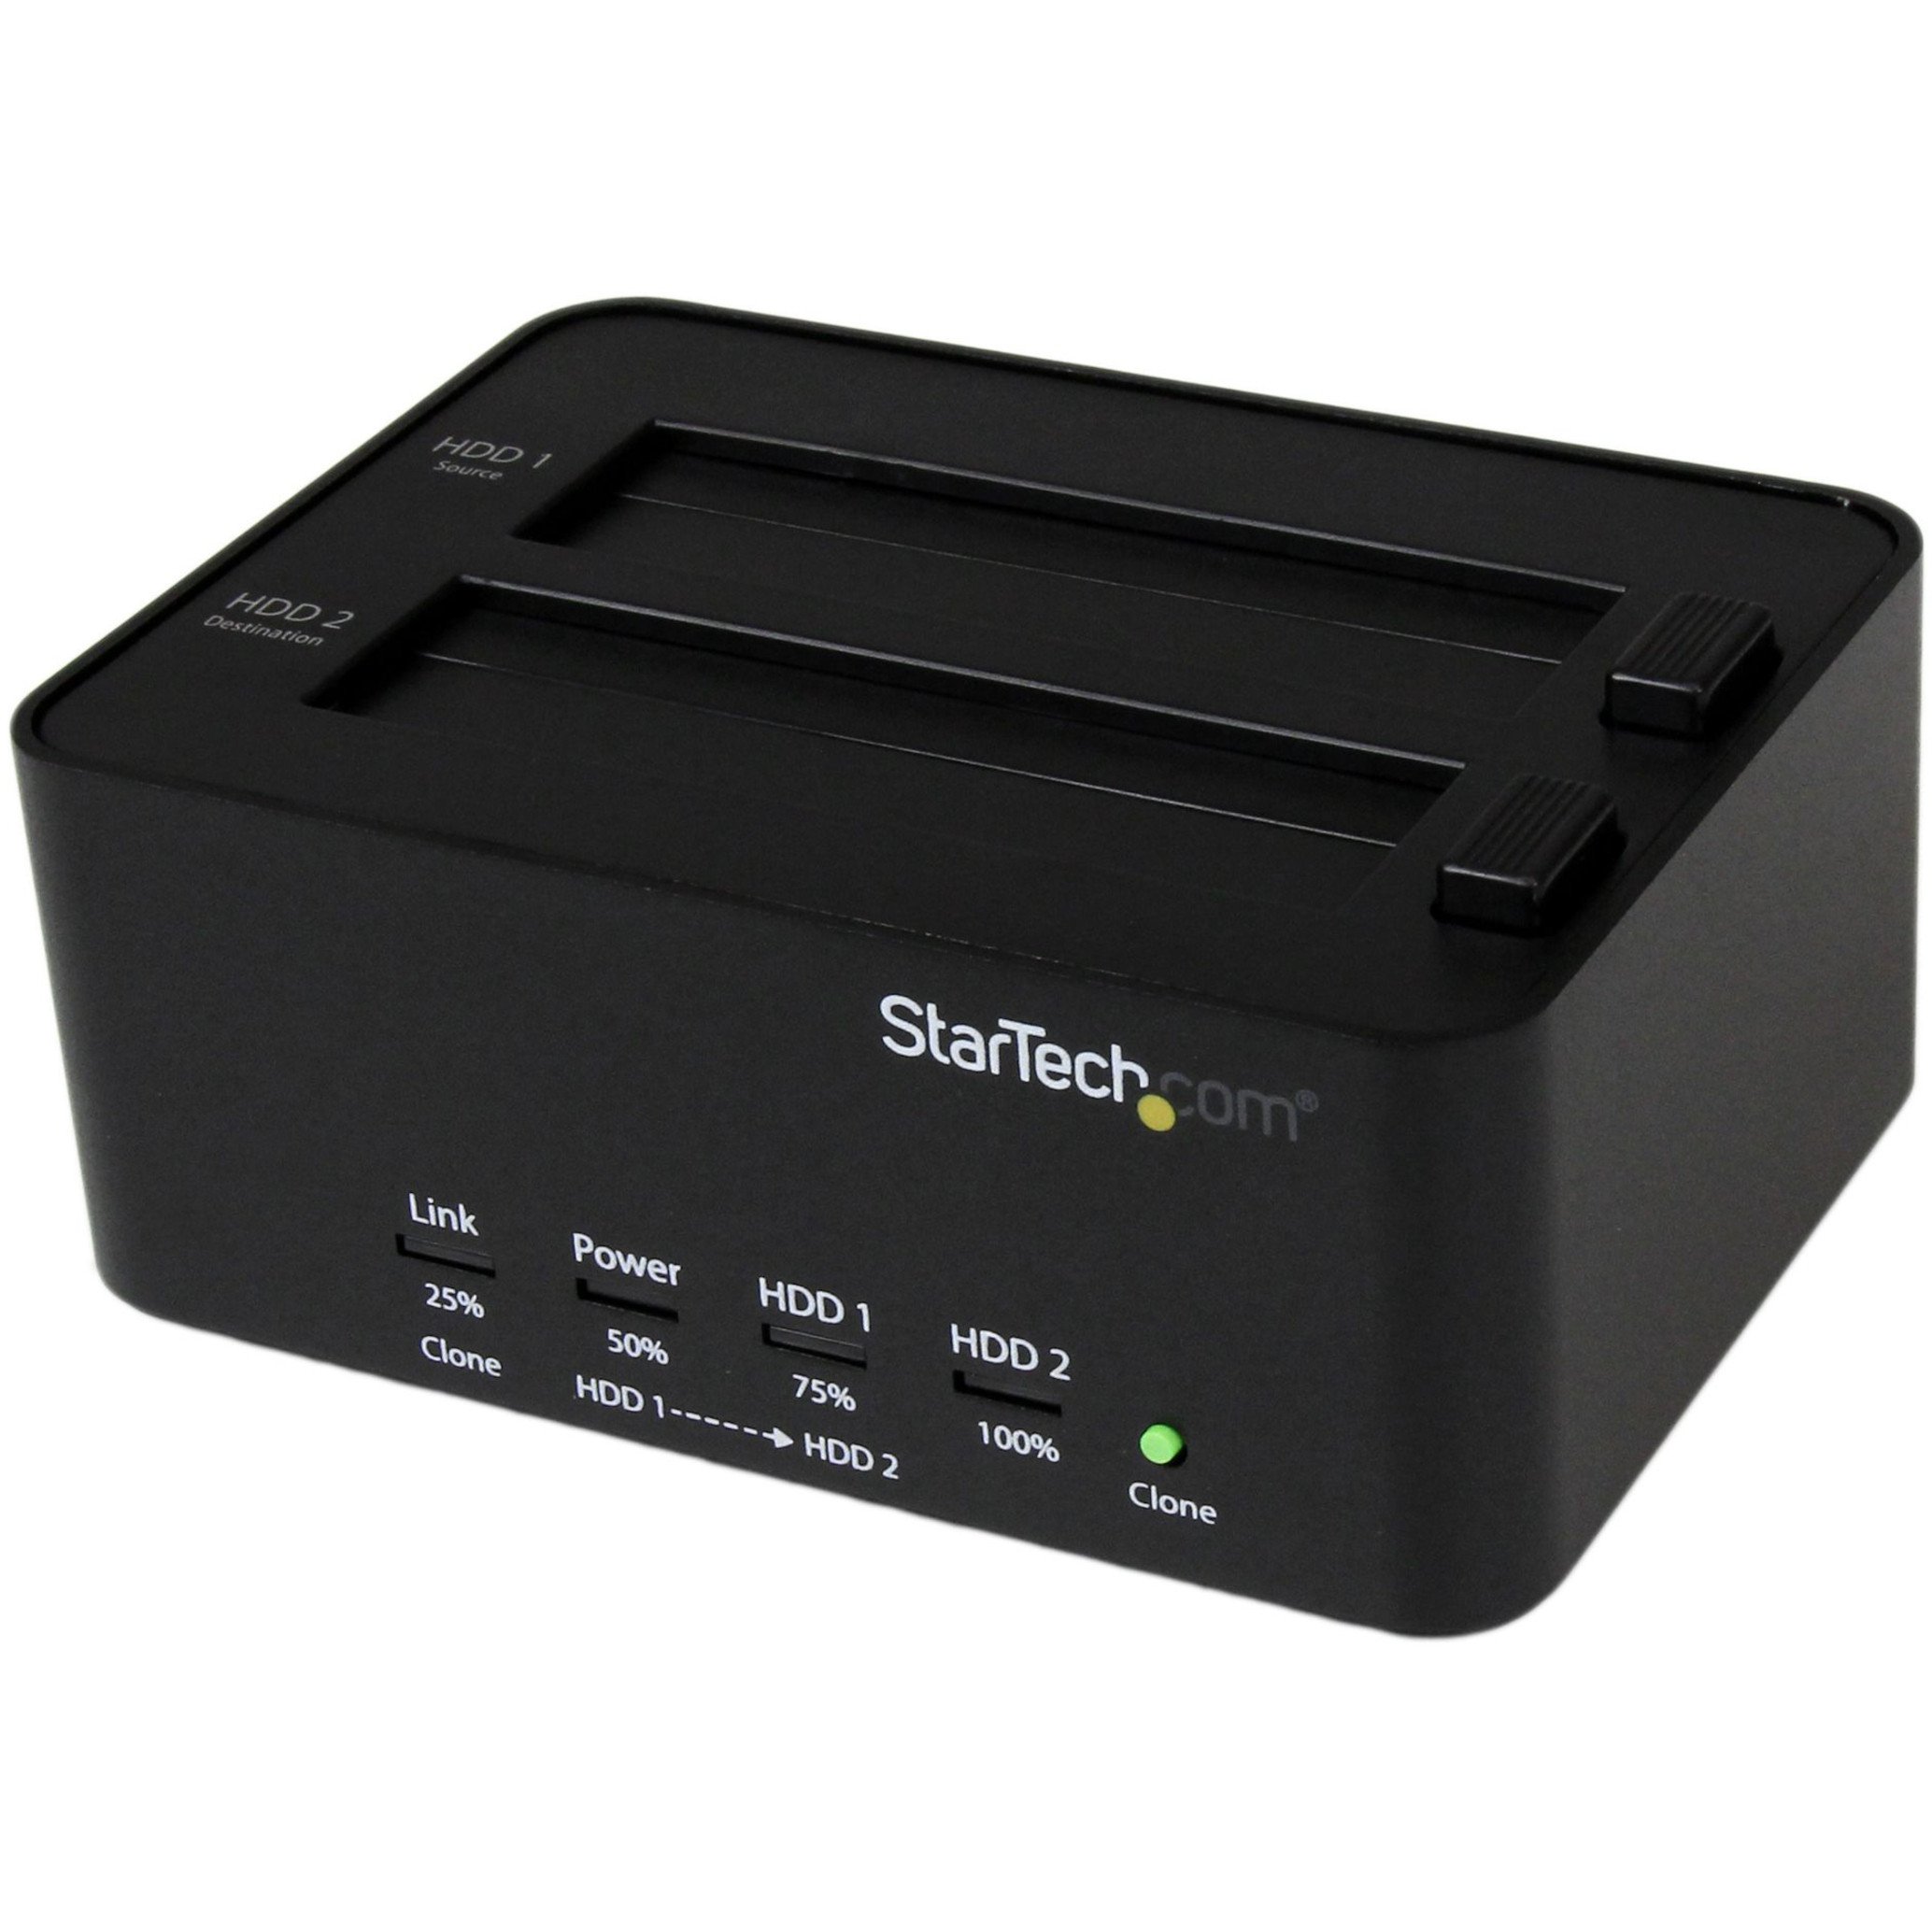 Startech .com Dual Bay Hard Drive Duplicator and Eraser, Standalone SATA HDD/SSD Cloner and Disk Eraser, USB 3.0 to SATA Docking Station2… SATDOCK2REU3